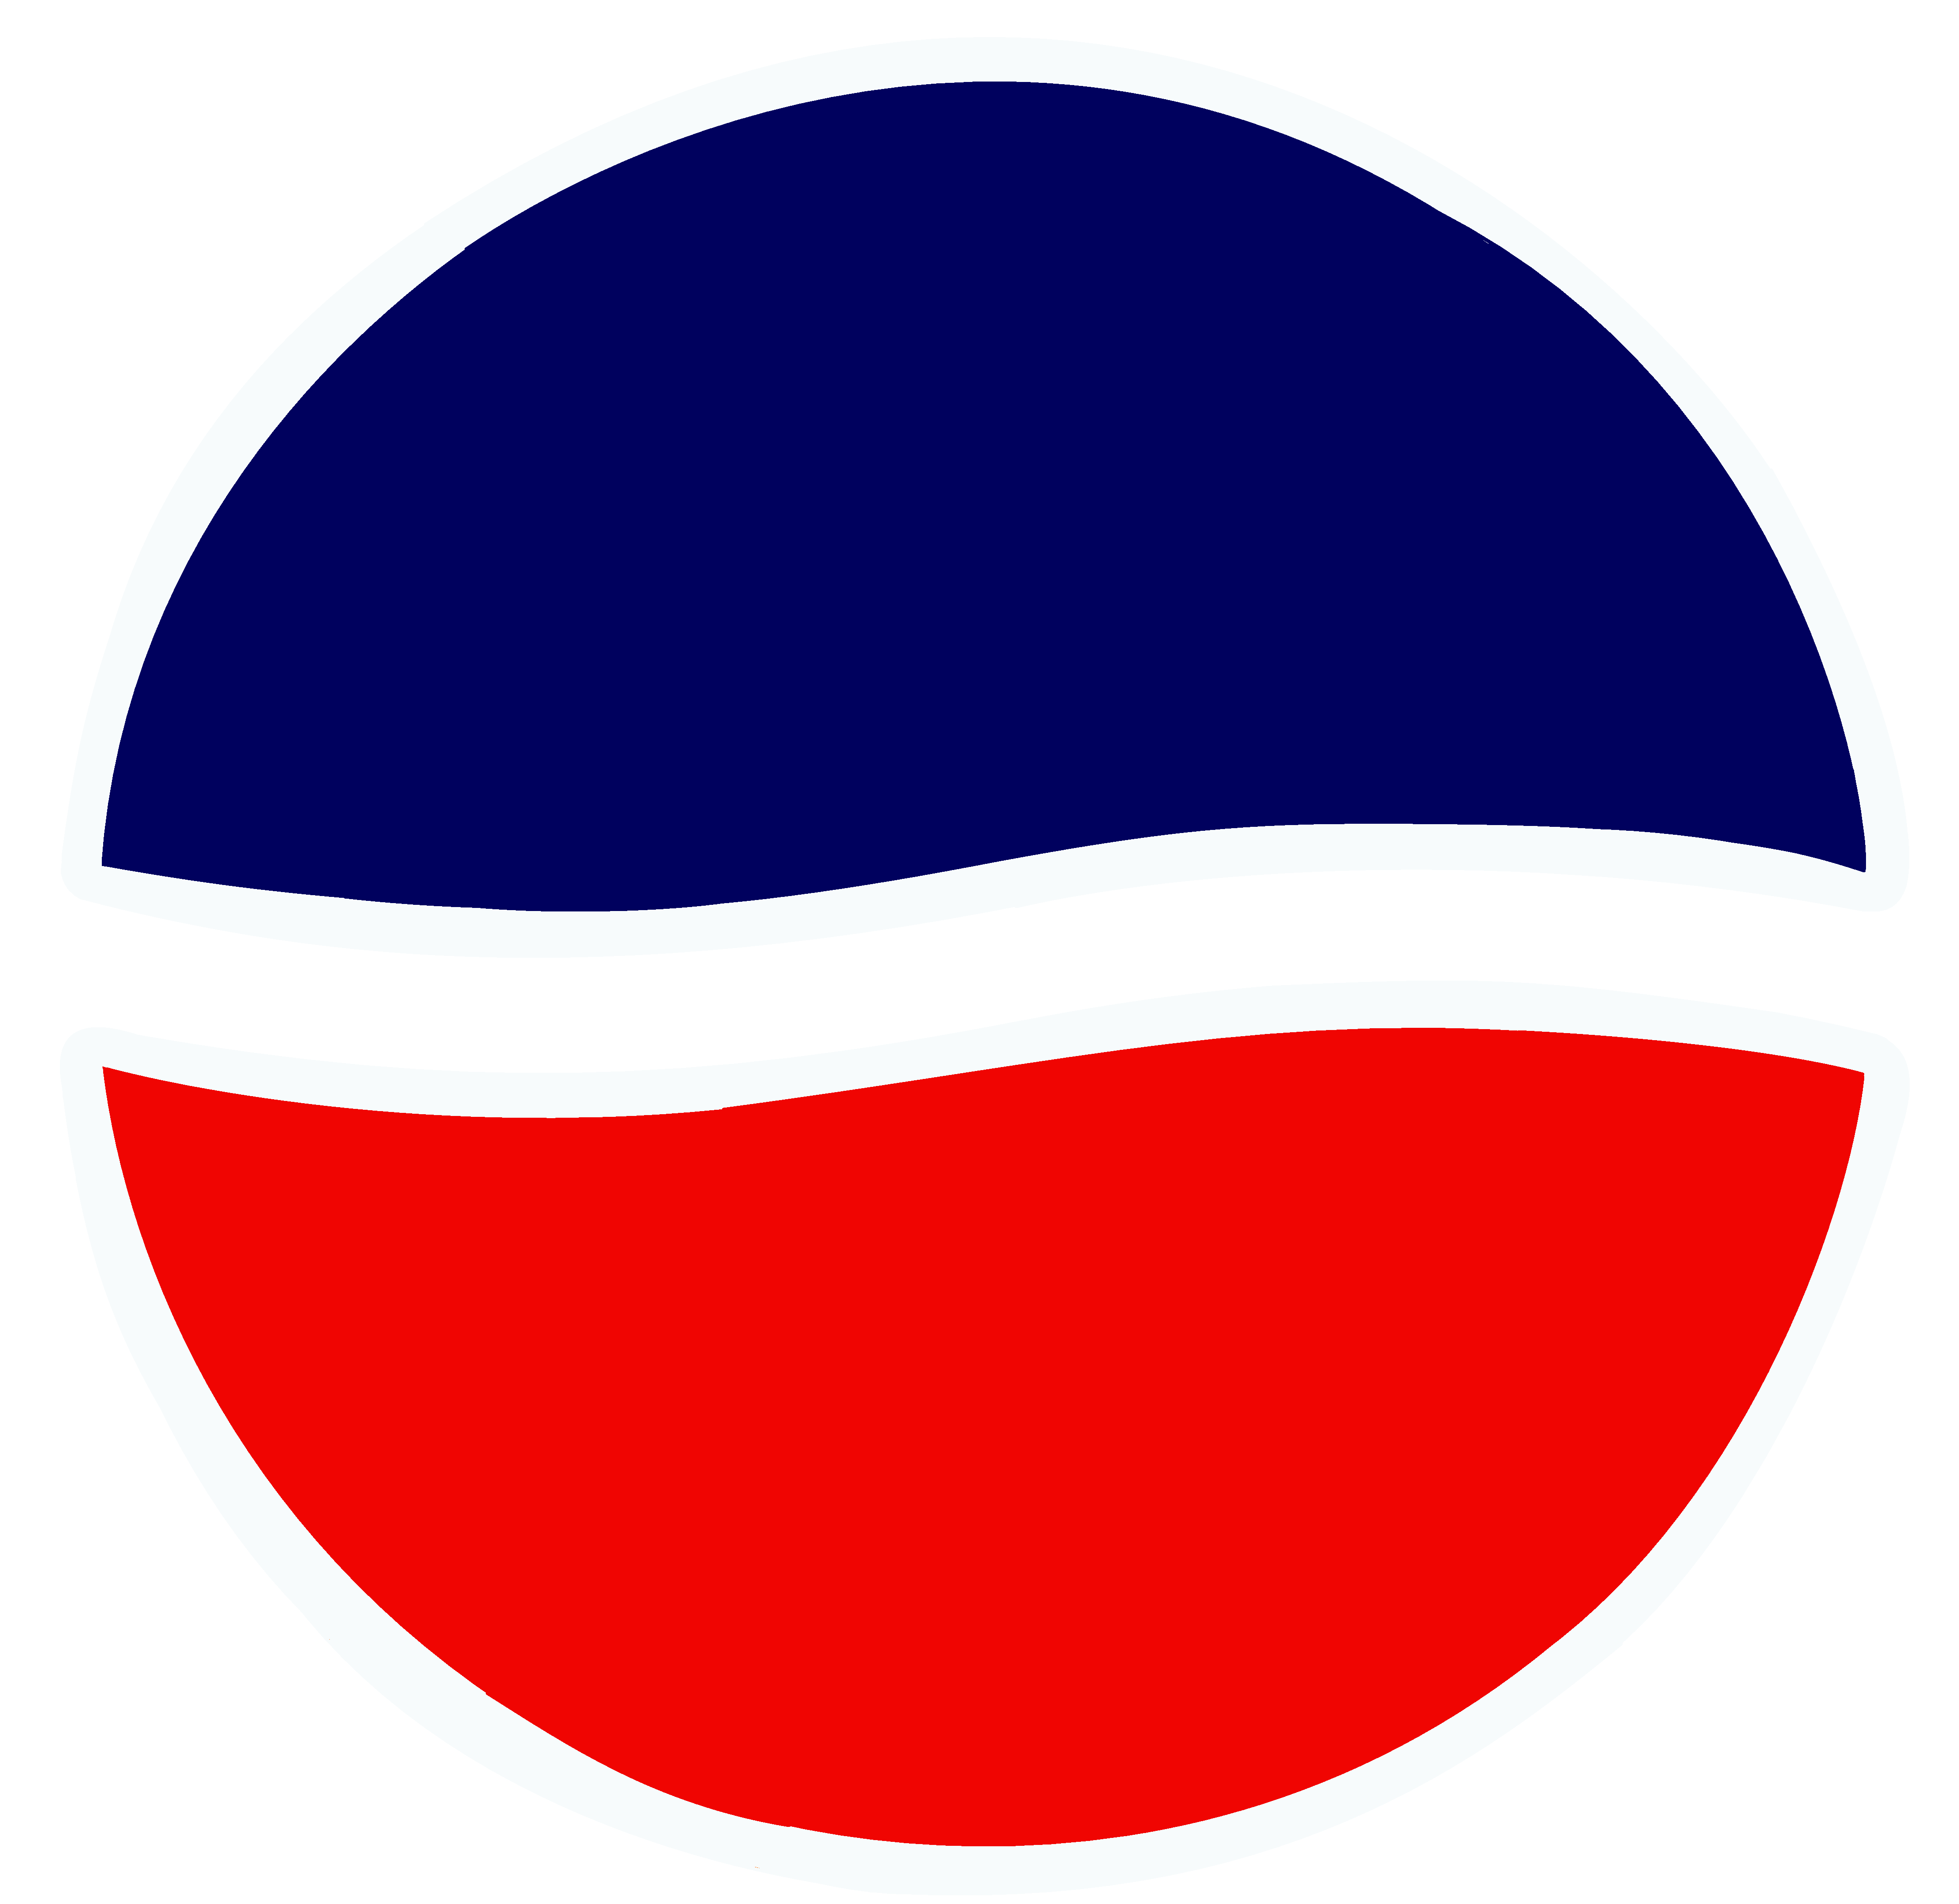 Old and New Pepsi Logo - Old pepsi Logos